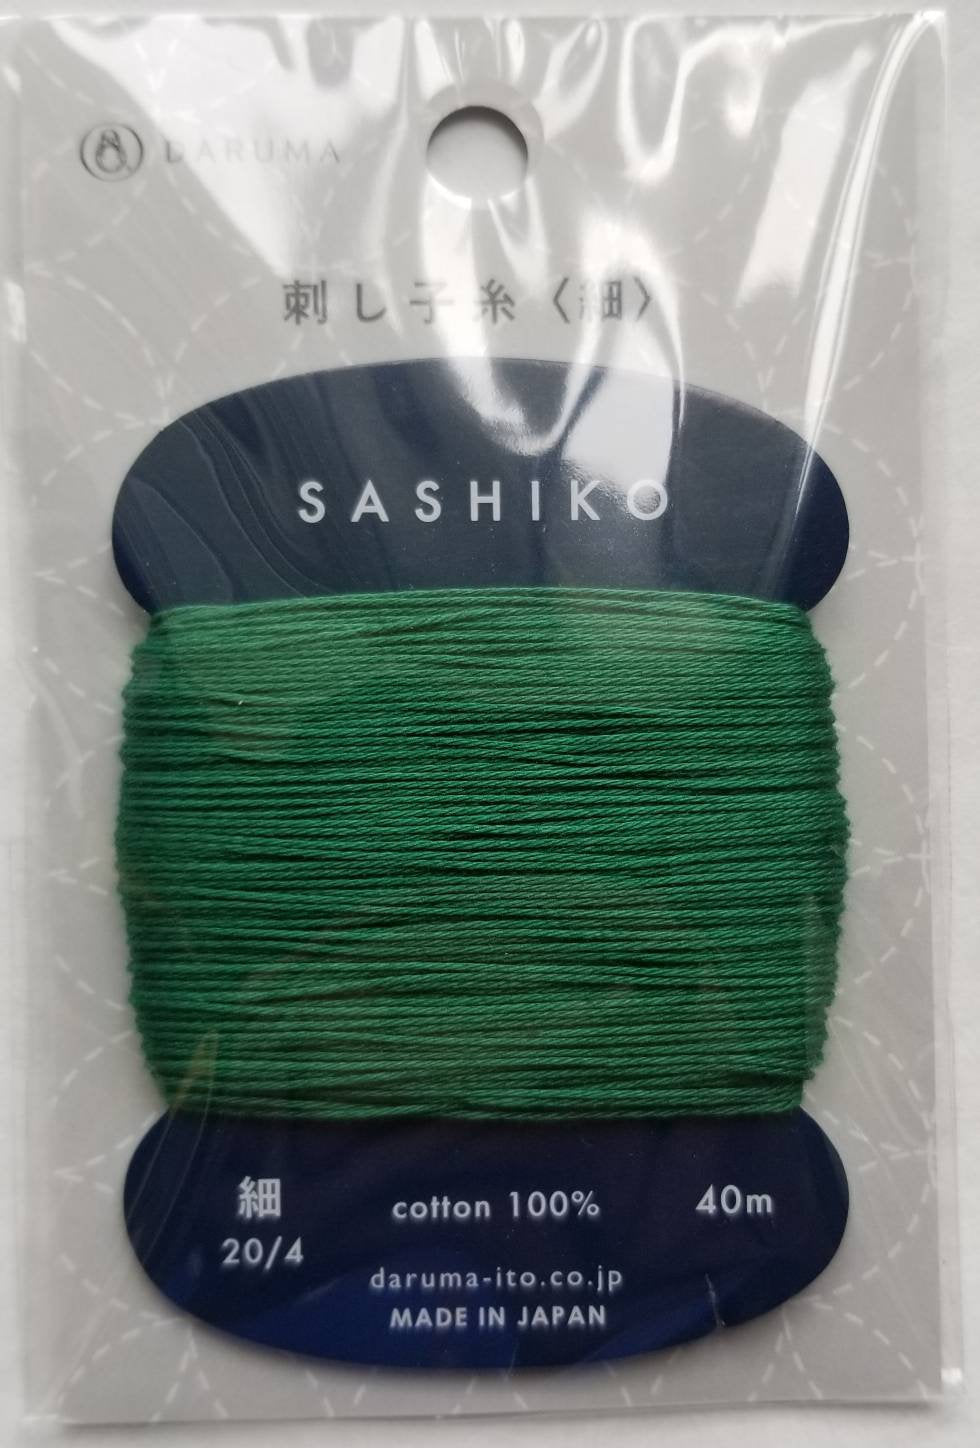 Daruma #208 BAMBOO GREEN Japanese Cotton SASHIKO thread 40 meter card 20/4